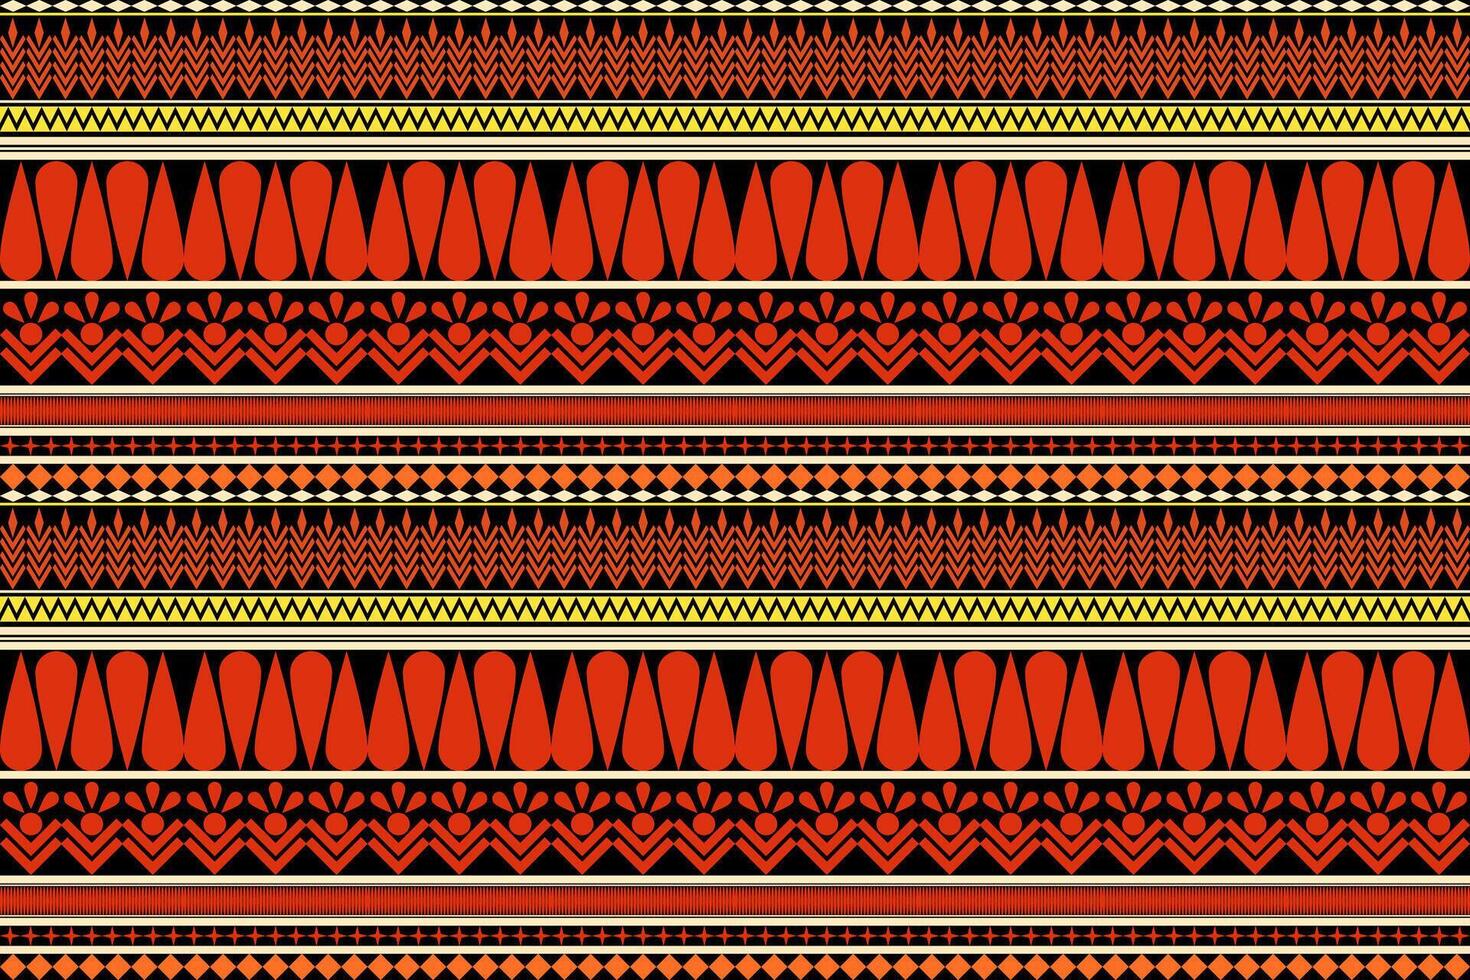 Geometric Ethnic pattern, Native American tribal fabric, tile, carpet, , illustration design, on navy blue background vector